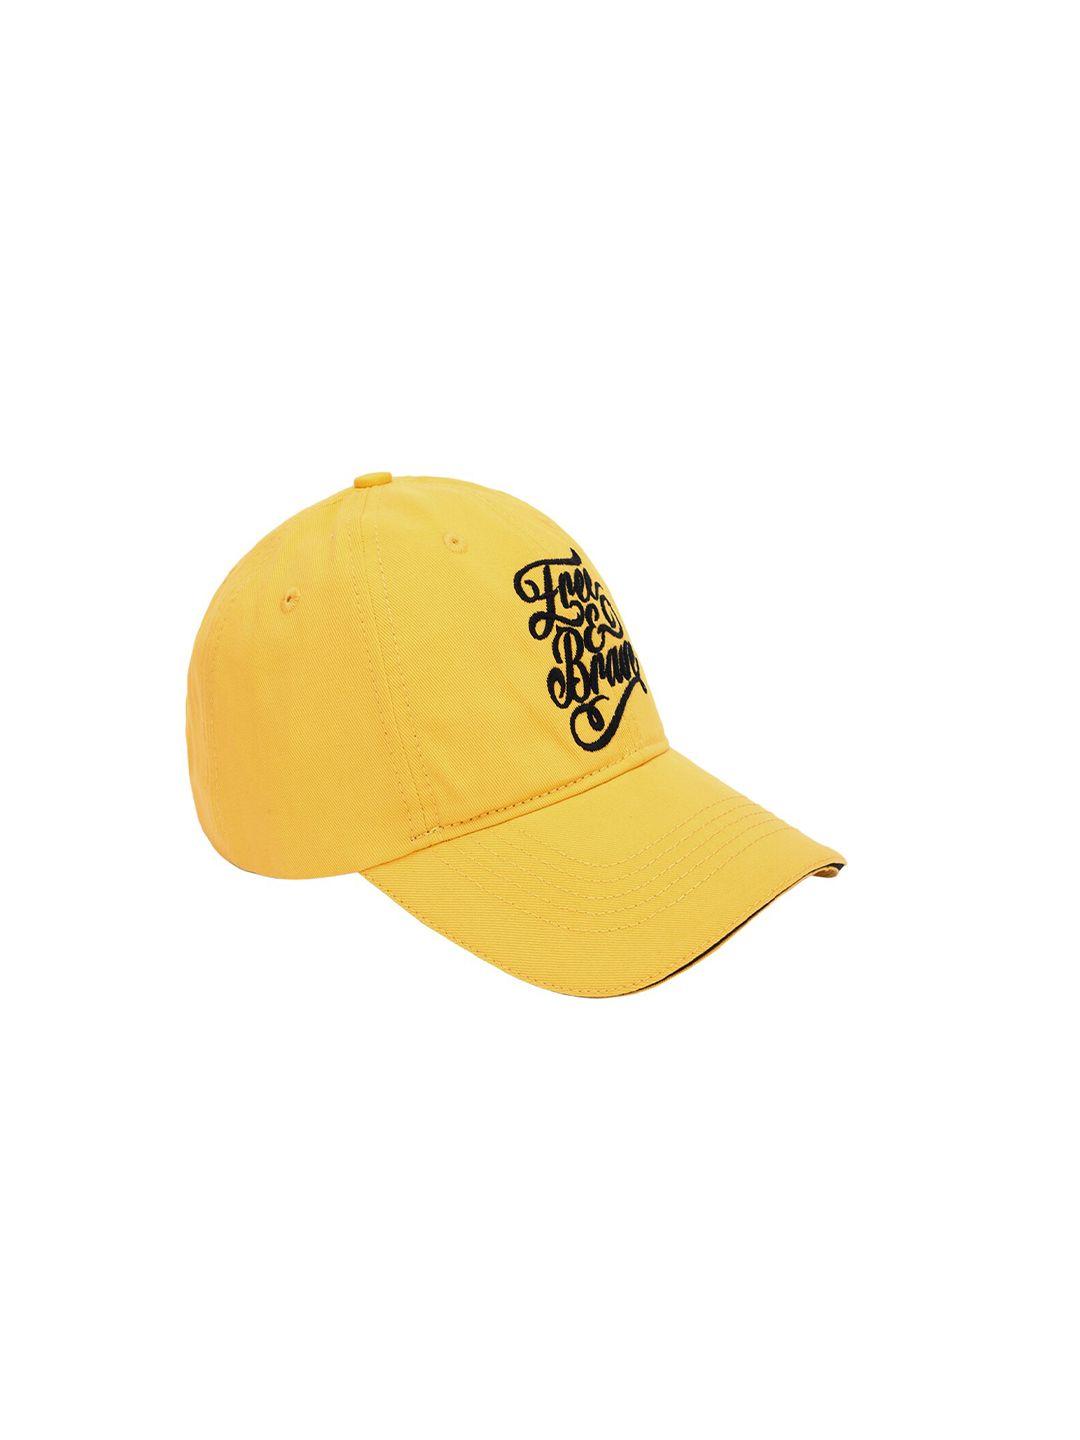 peter england men yellow & black printed baseball cap